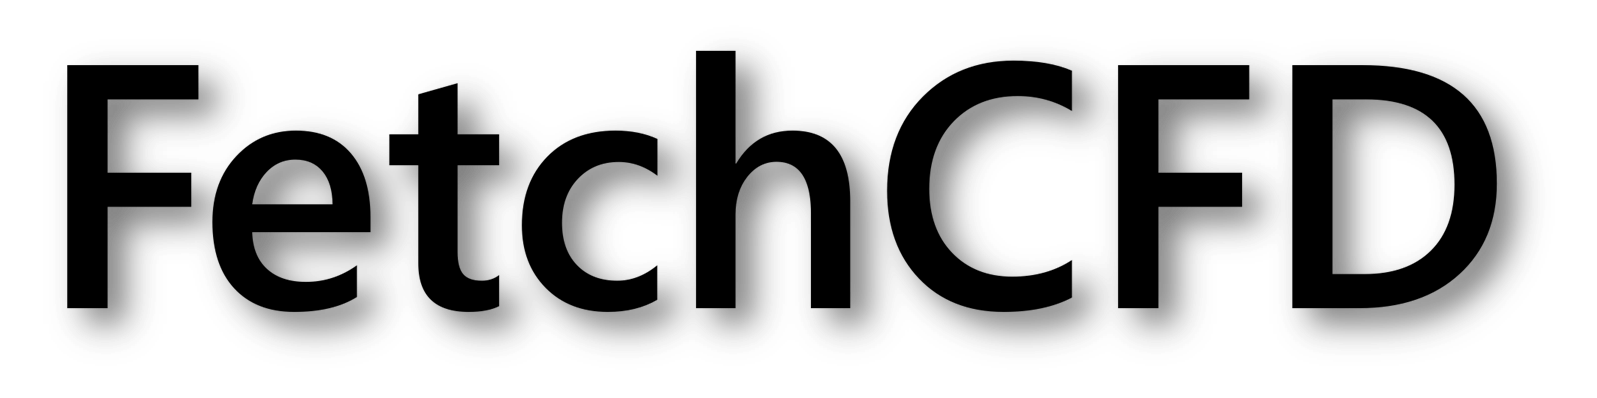 fetchcfd logo